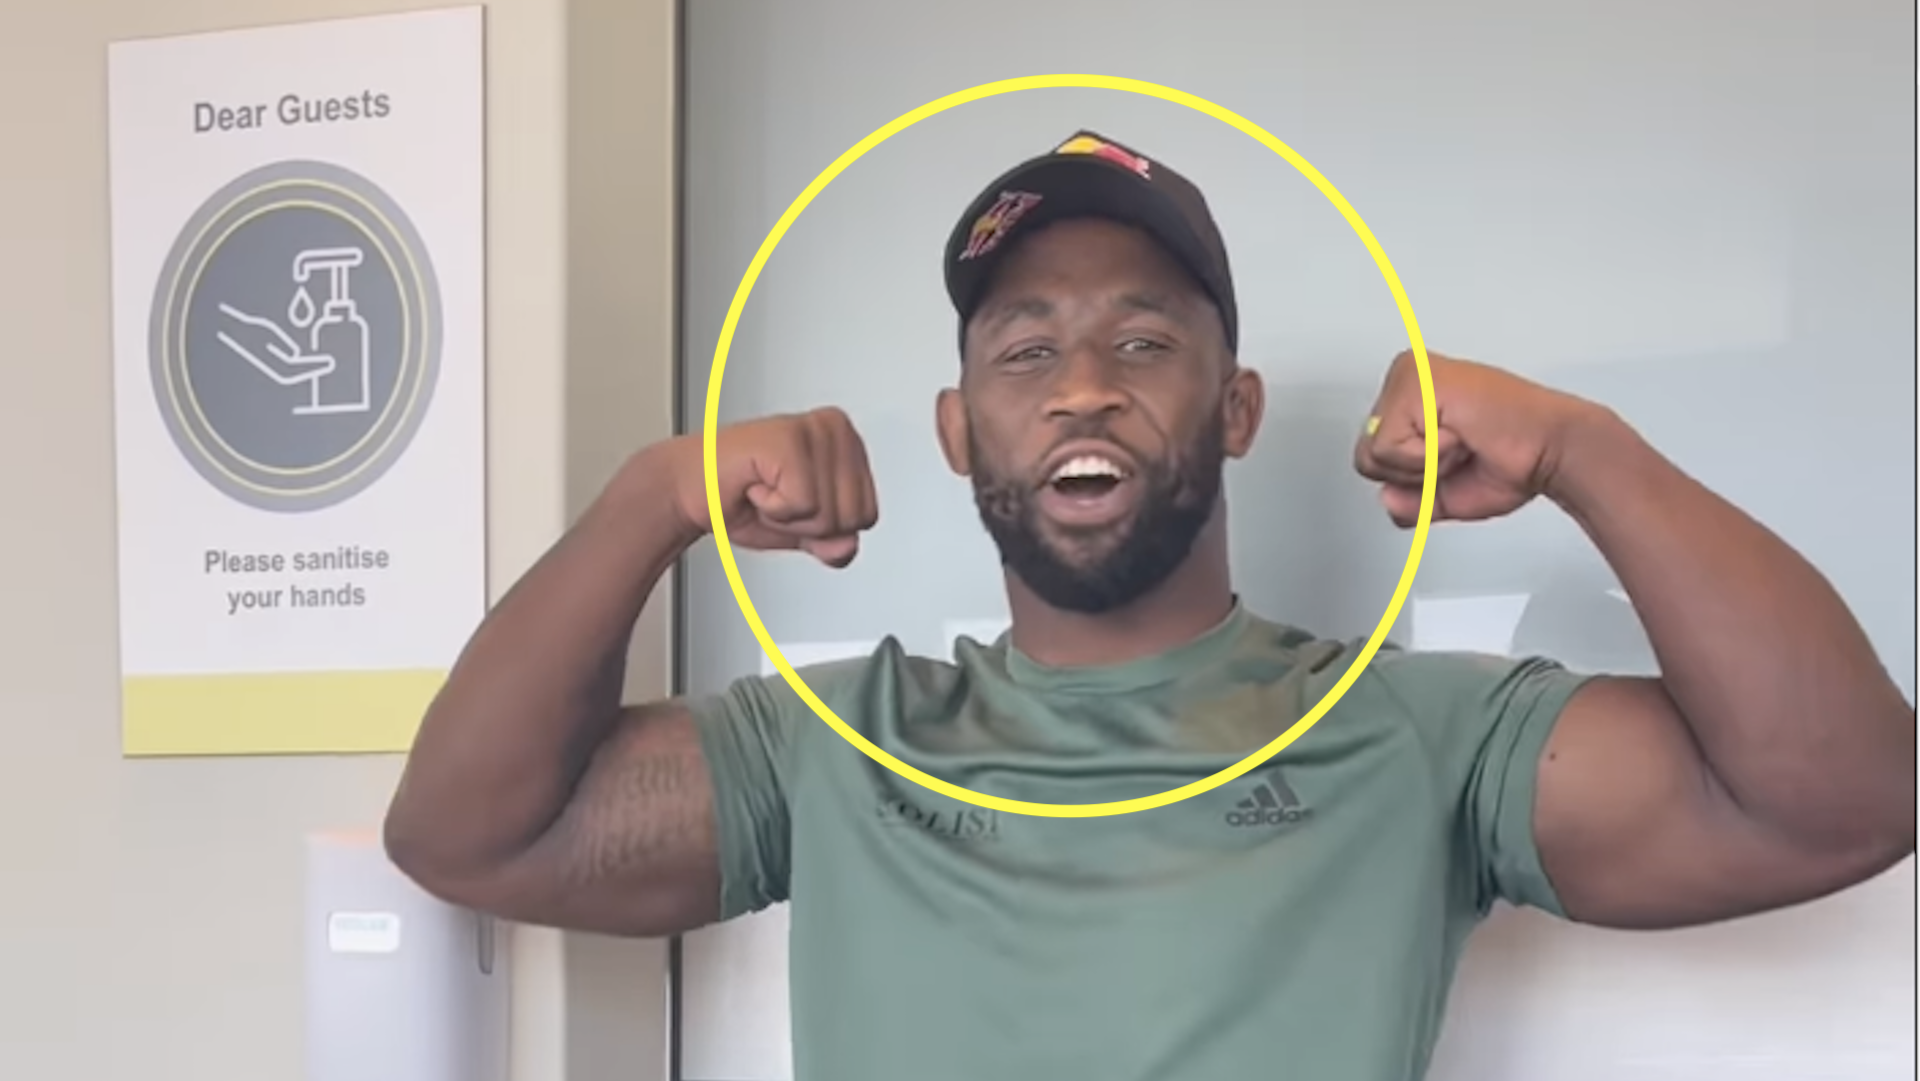 Springboks captain Siya Kolisi hits the gym just days after major knee surgery